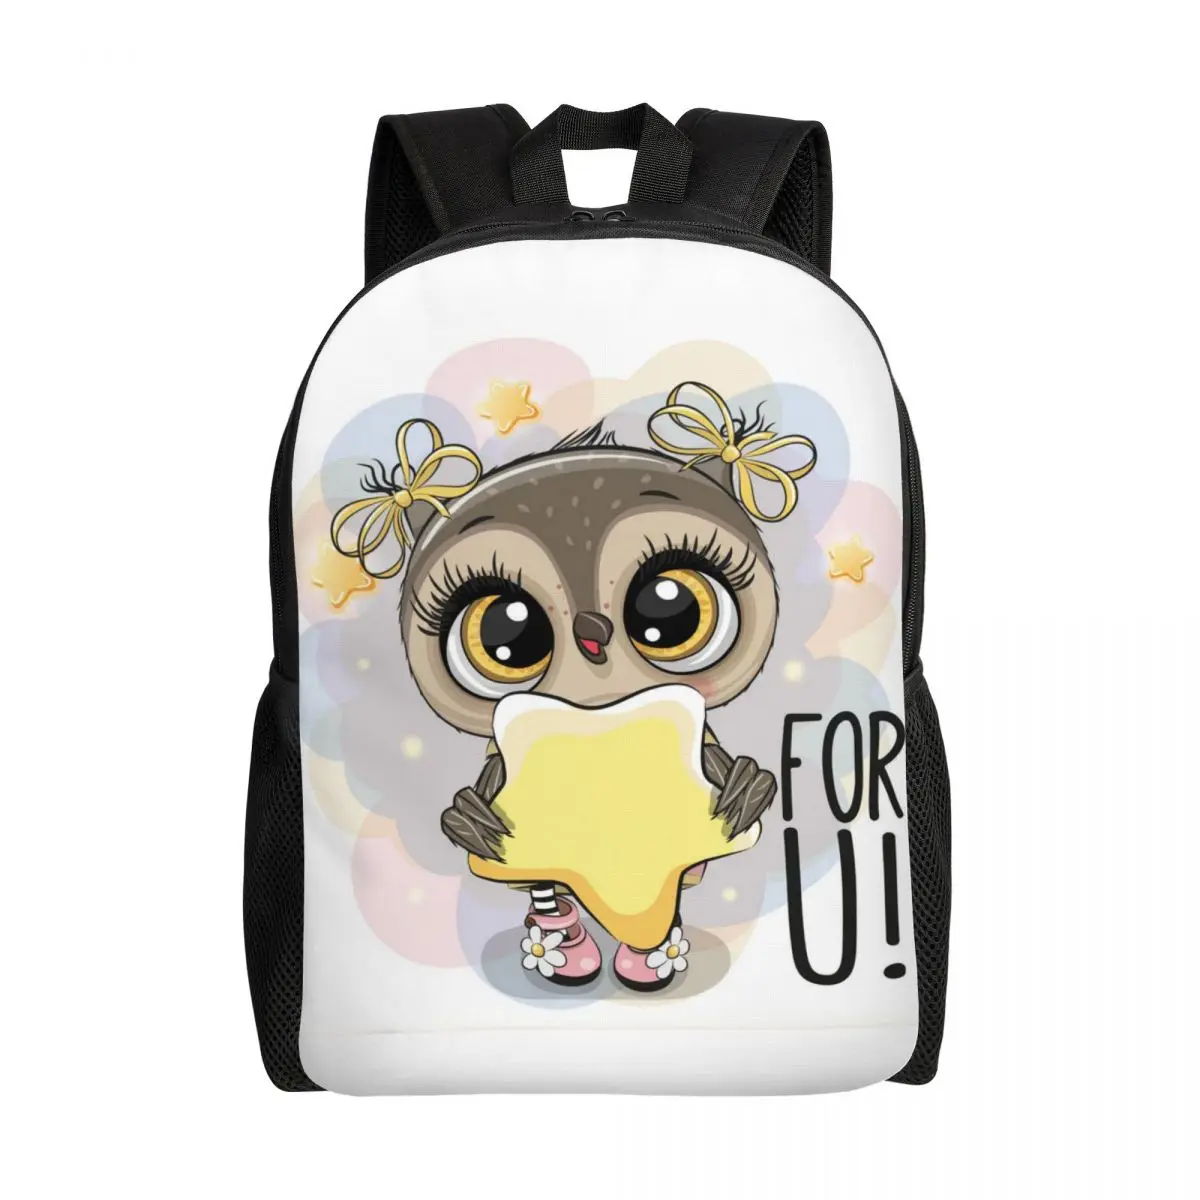 

Cartoon Owl With Gold Star Backpacks for Men Women Waterproof School College Kawaii Animal Bag Printing Bookbags